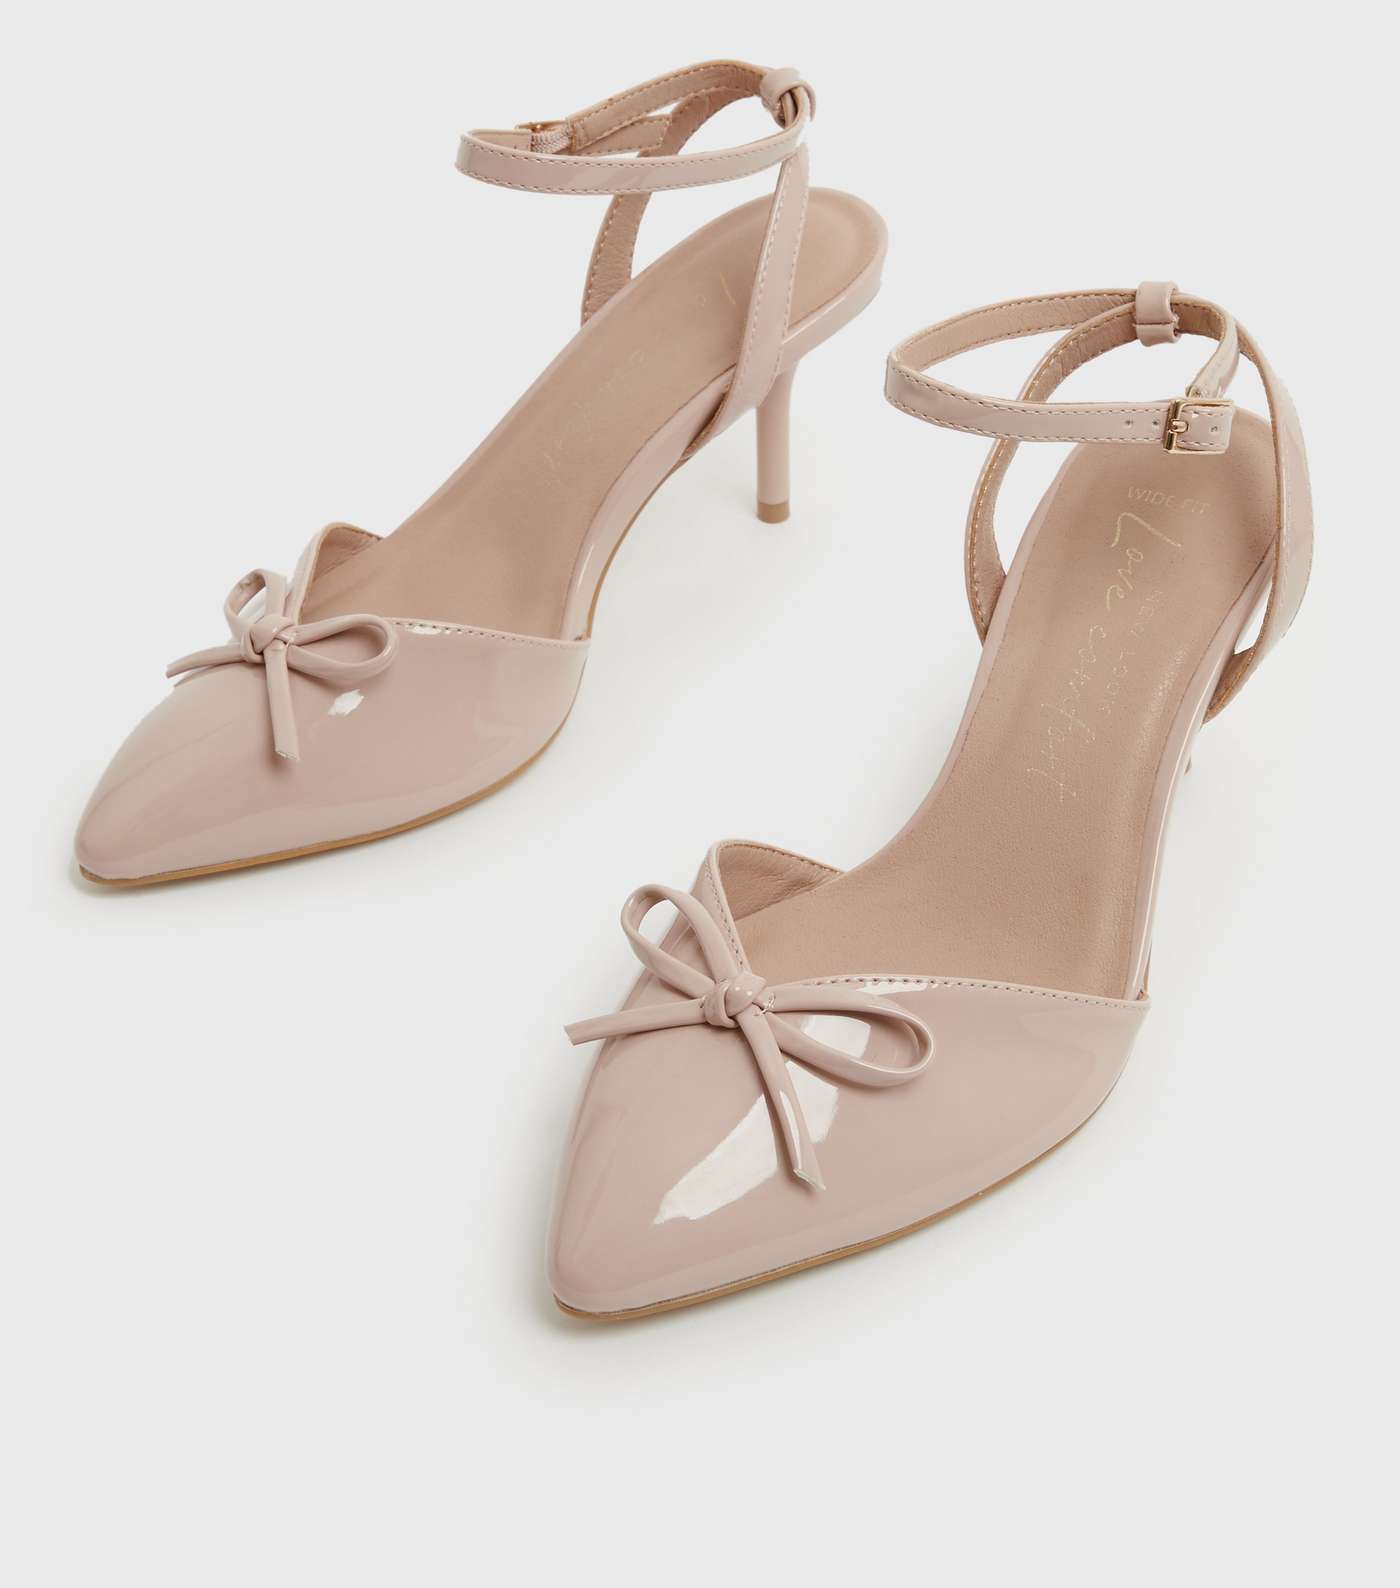 Wide Fit Pale Pink Patent Bow 2 Part Court Shoes Image 3